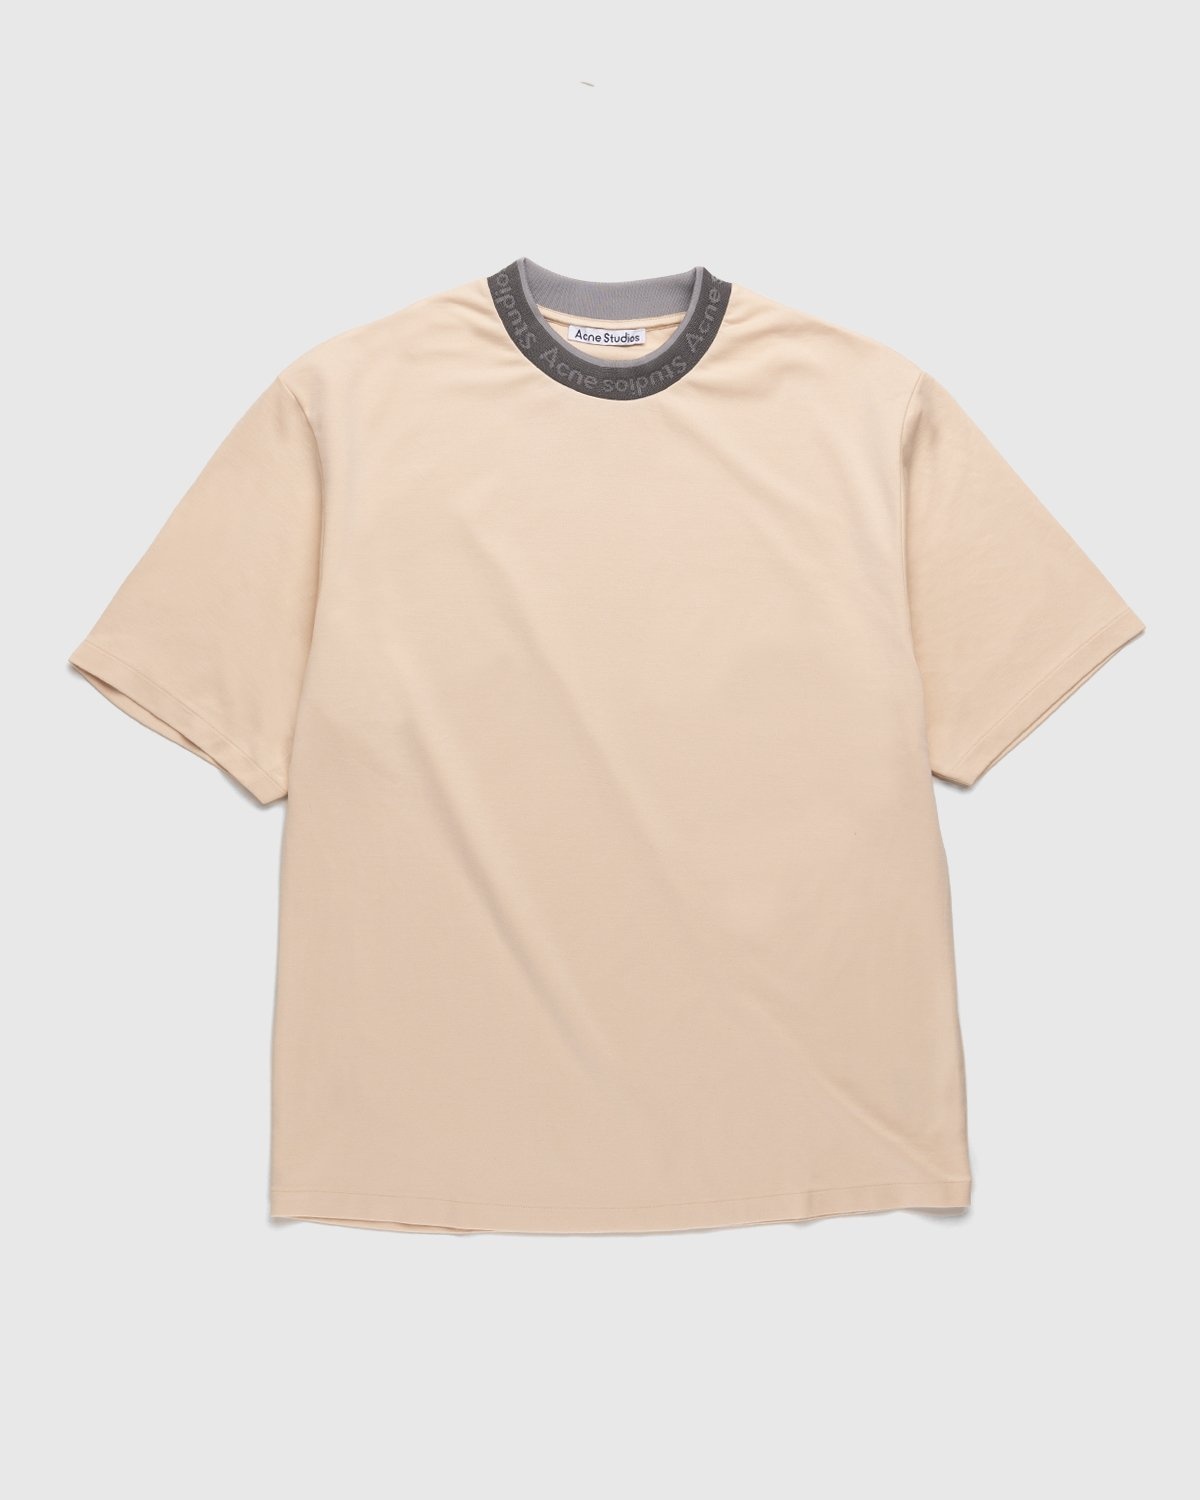 Acne Studios – Logo Collar T-Shirt Cream Beige - T-shirts - Beige - Image 1